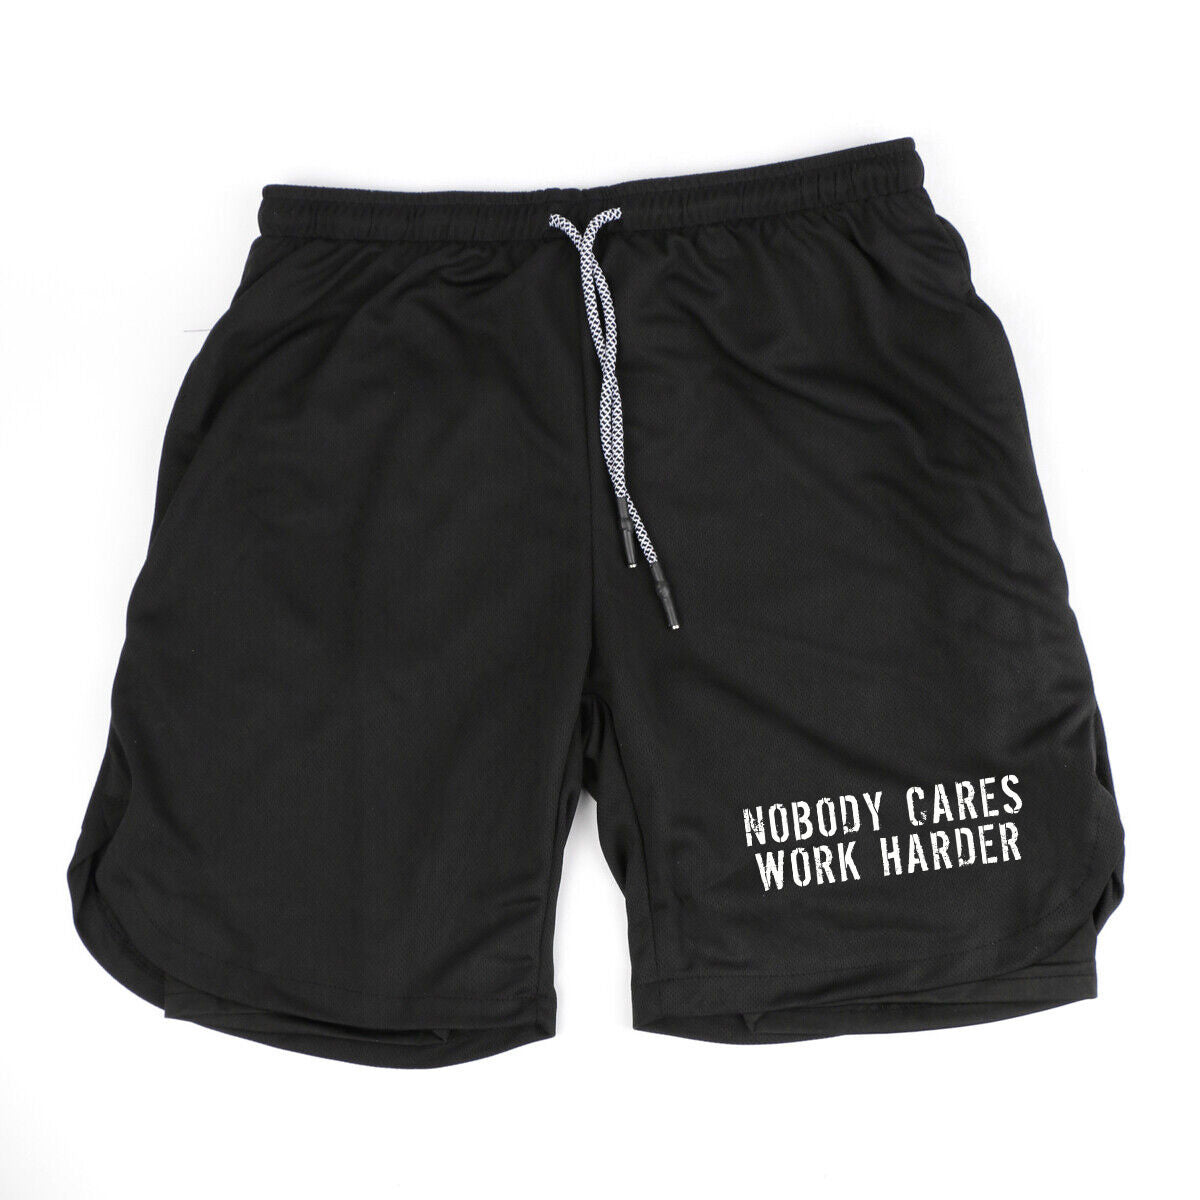 Nobody Cares Work Harder Print Men's Shorts